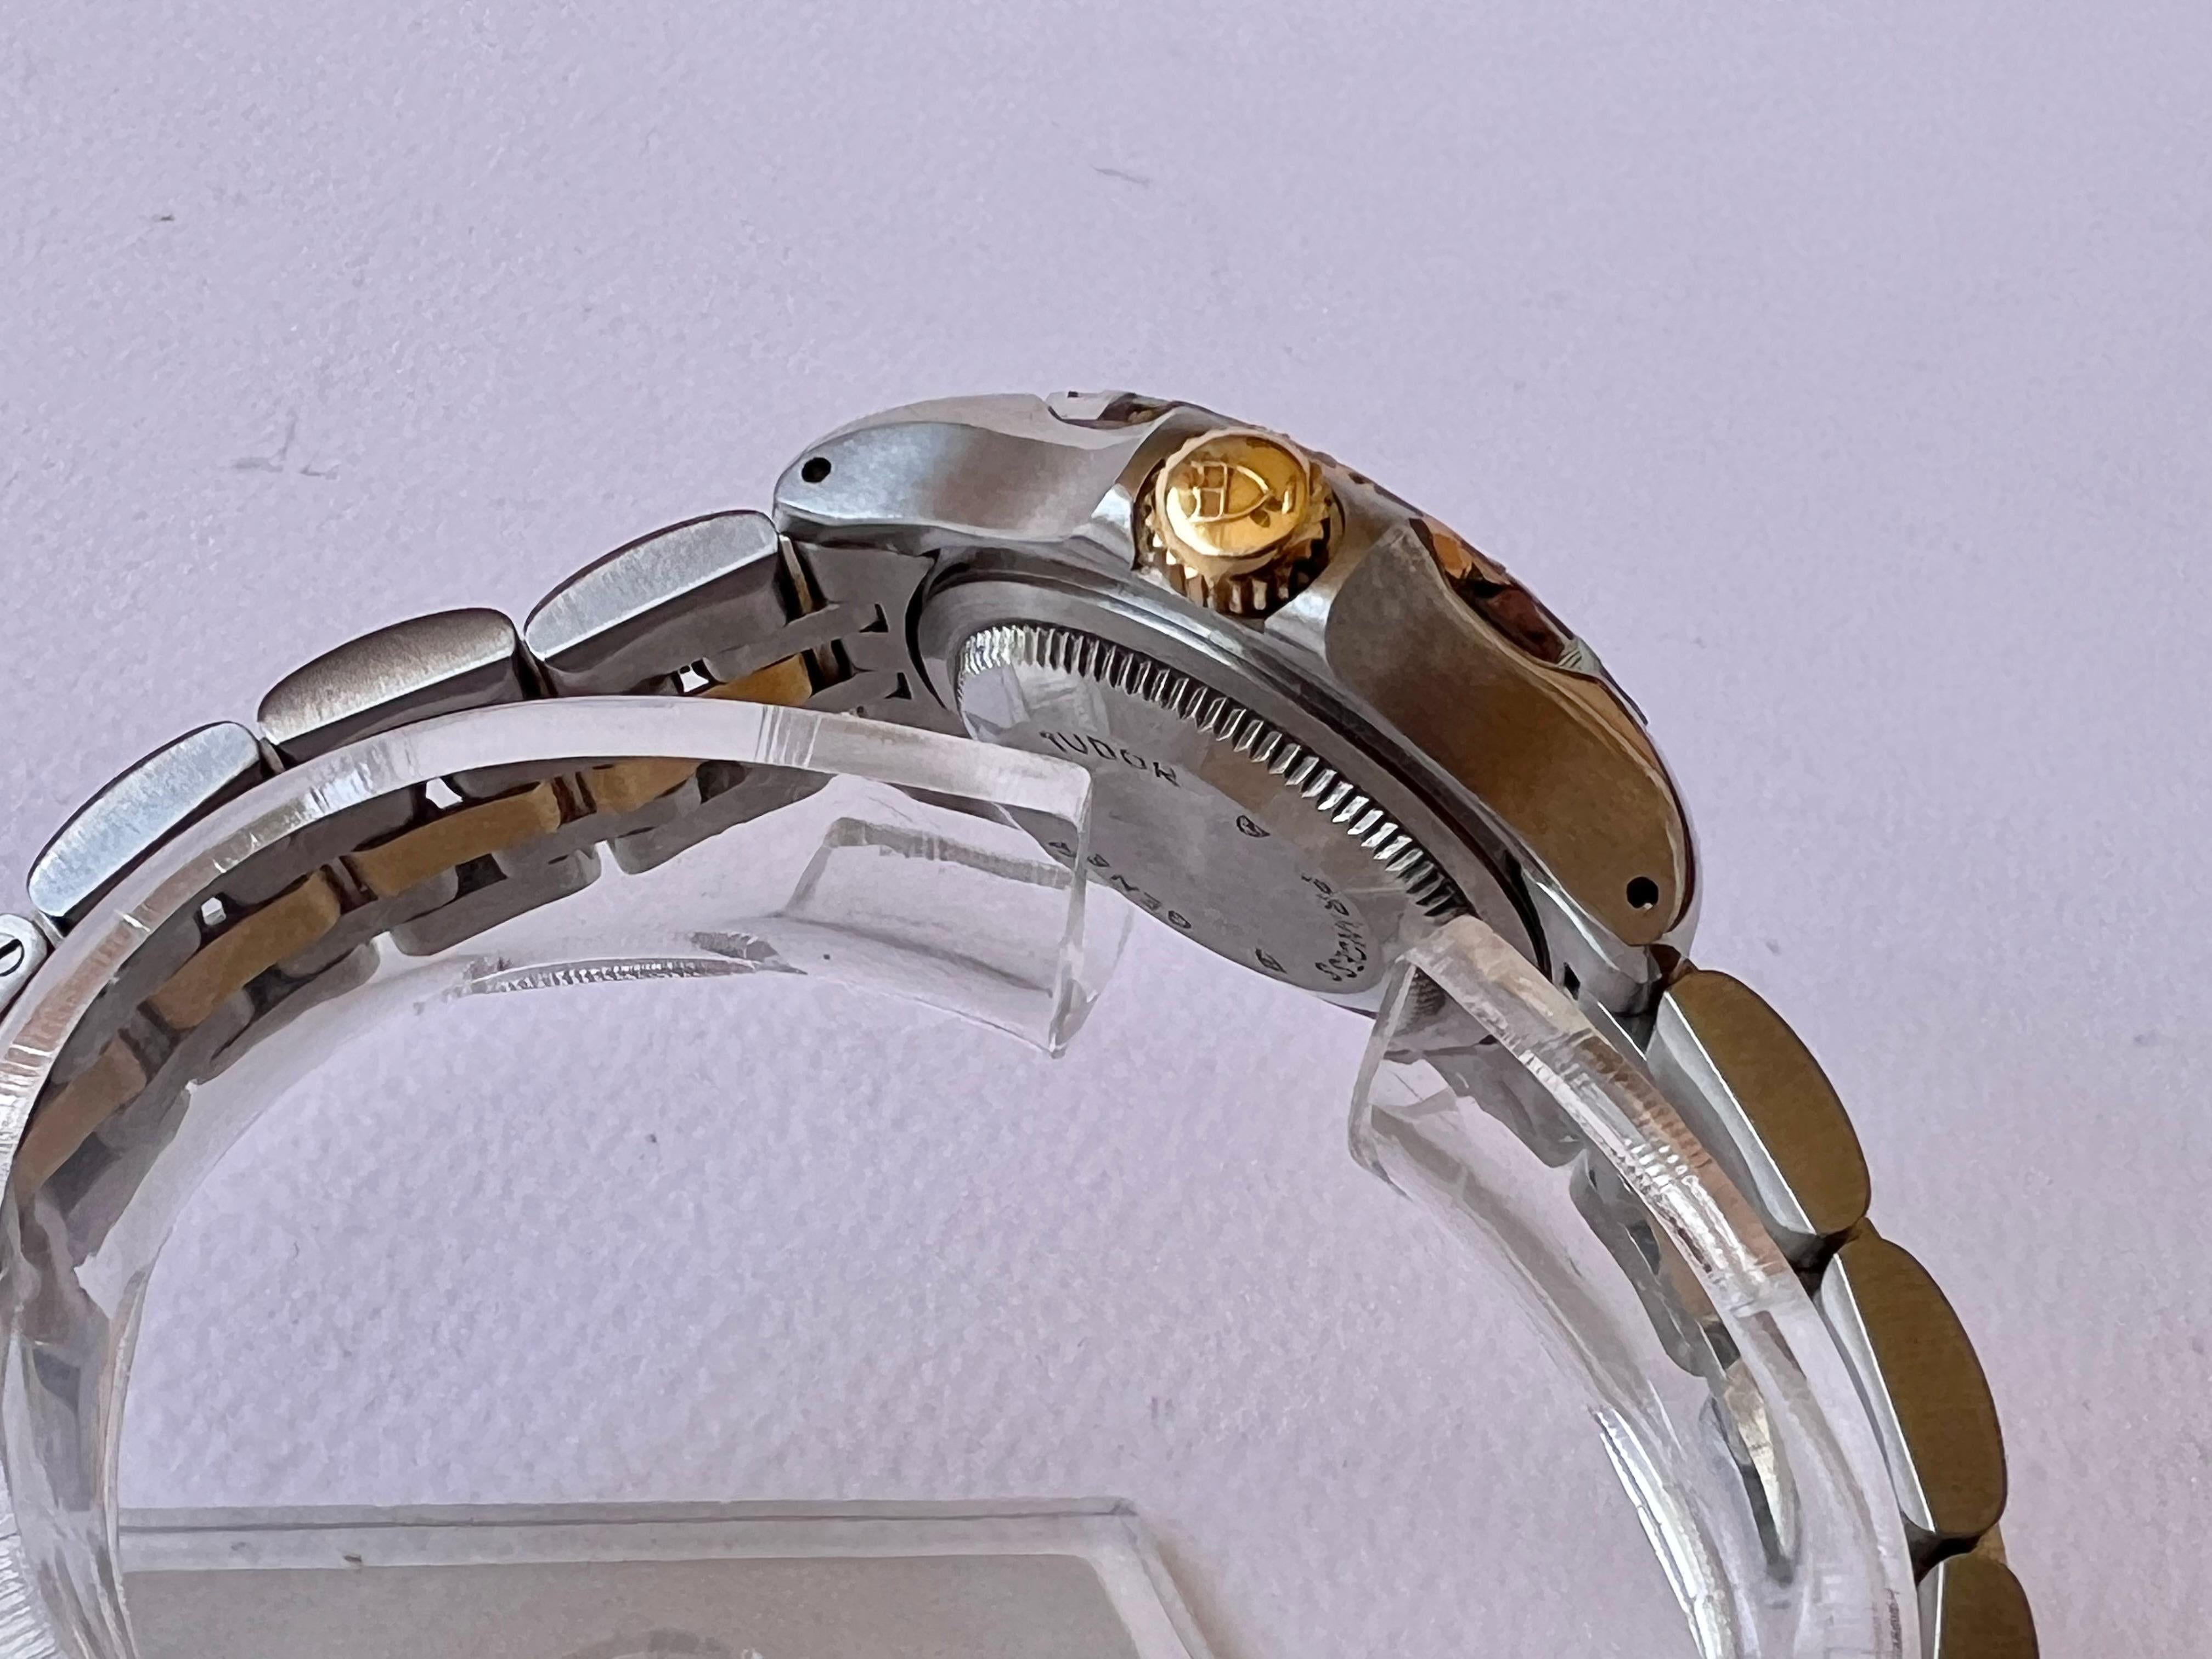 Tudor Hydronaut Princess Date Gold Bezel Steel & Gold Watch For Sale 4